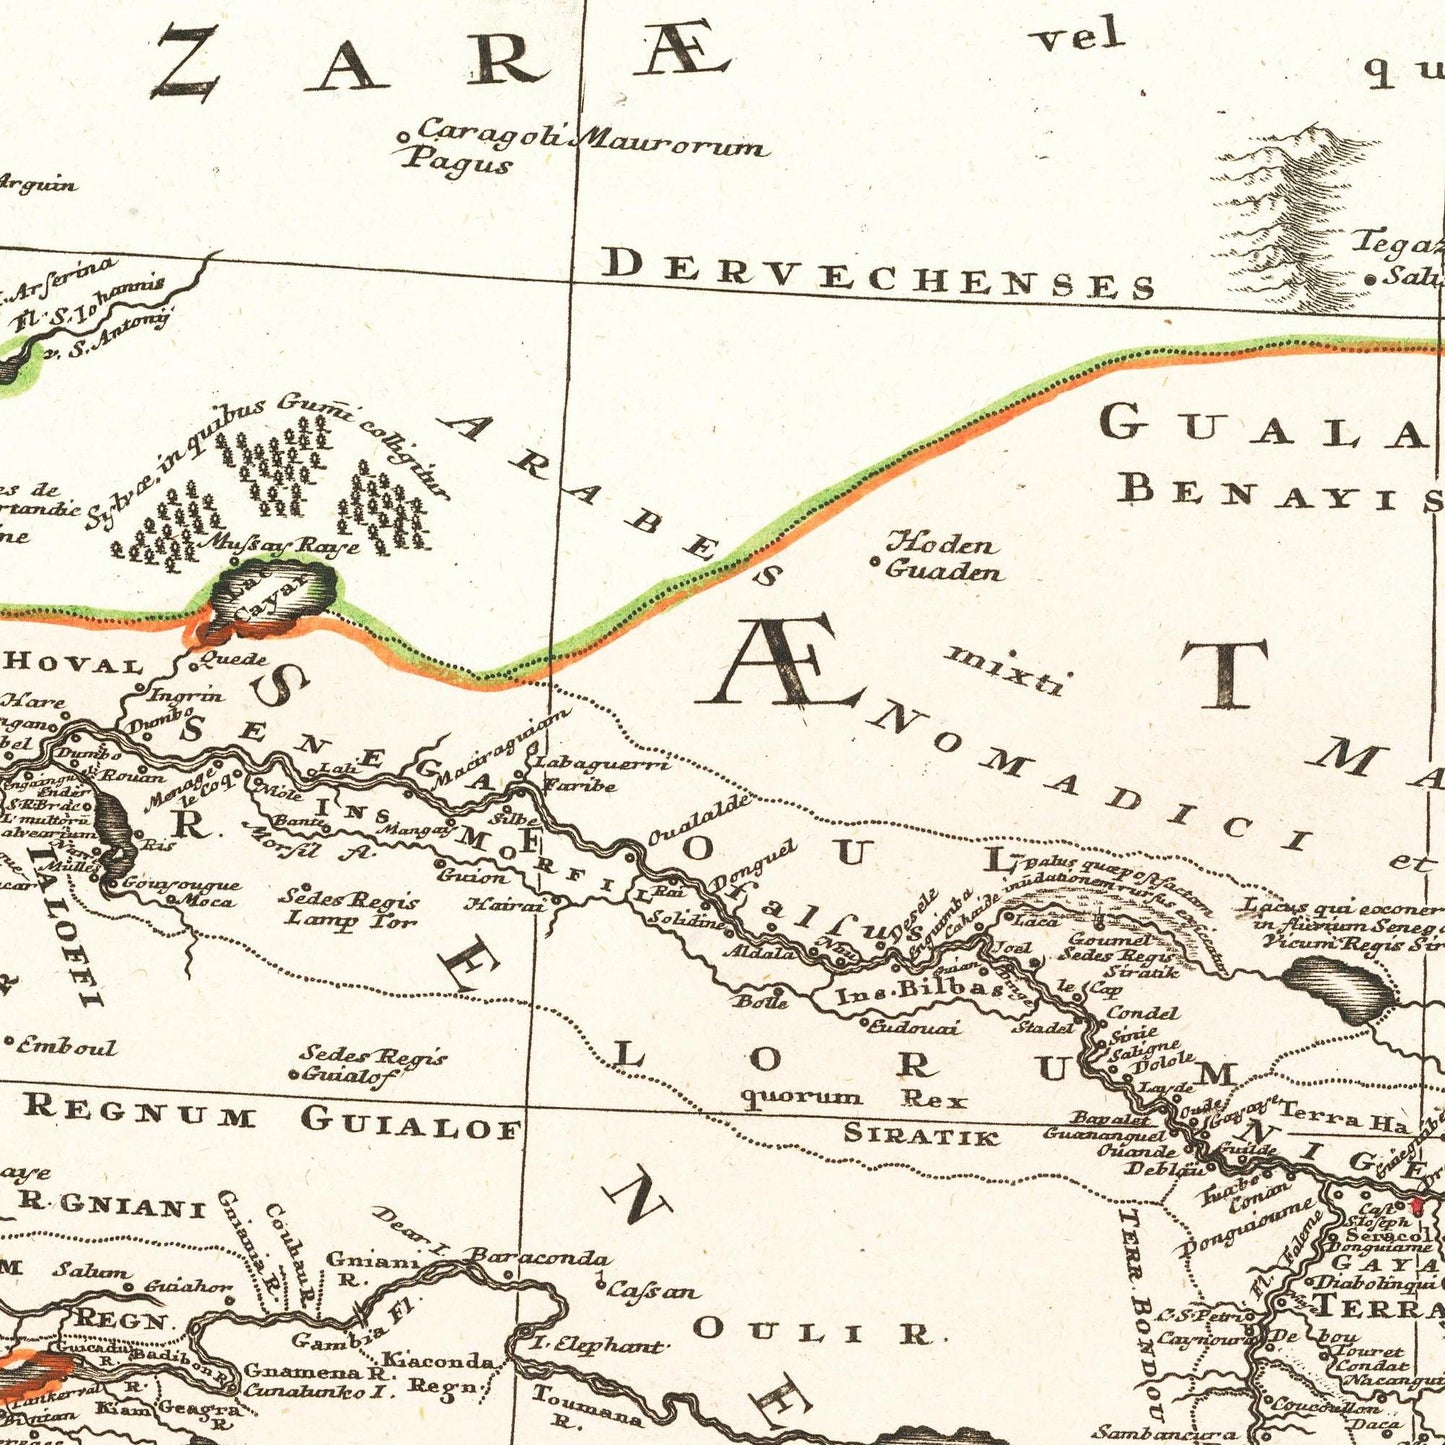 Historische Landkarte Westafrika um 1743